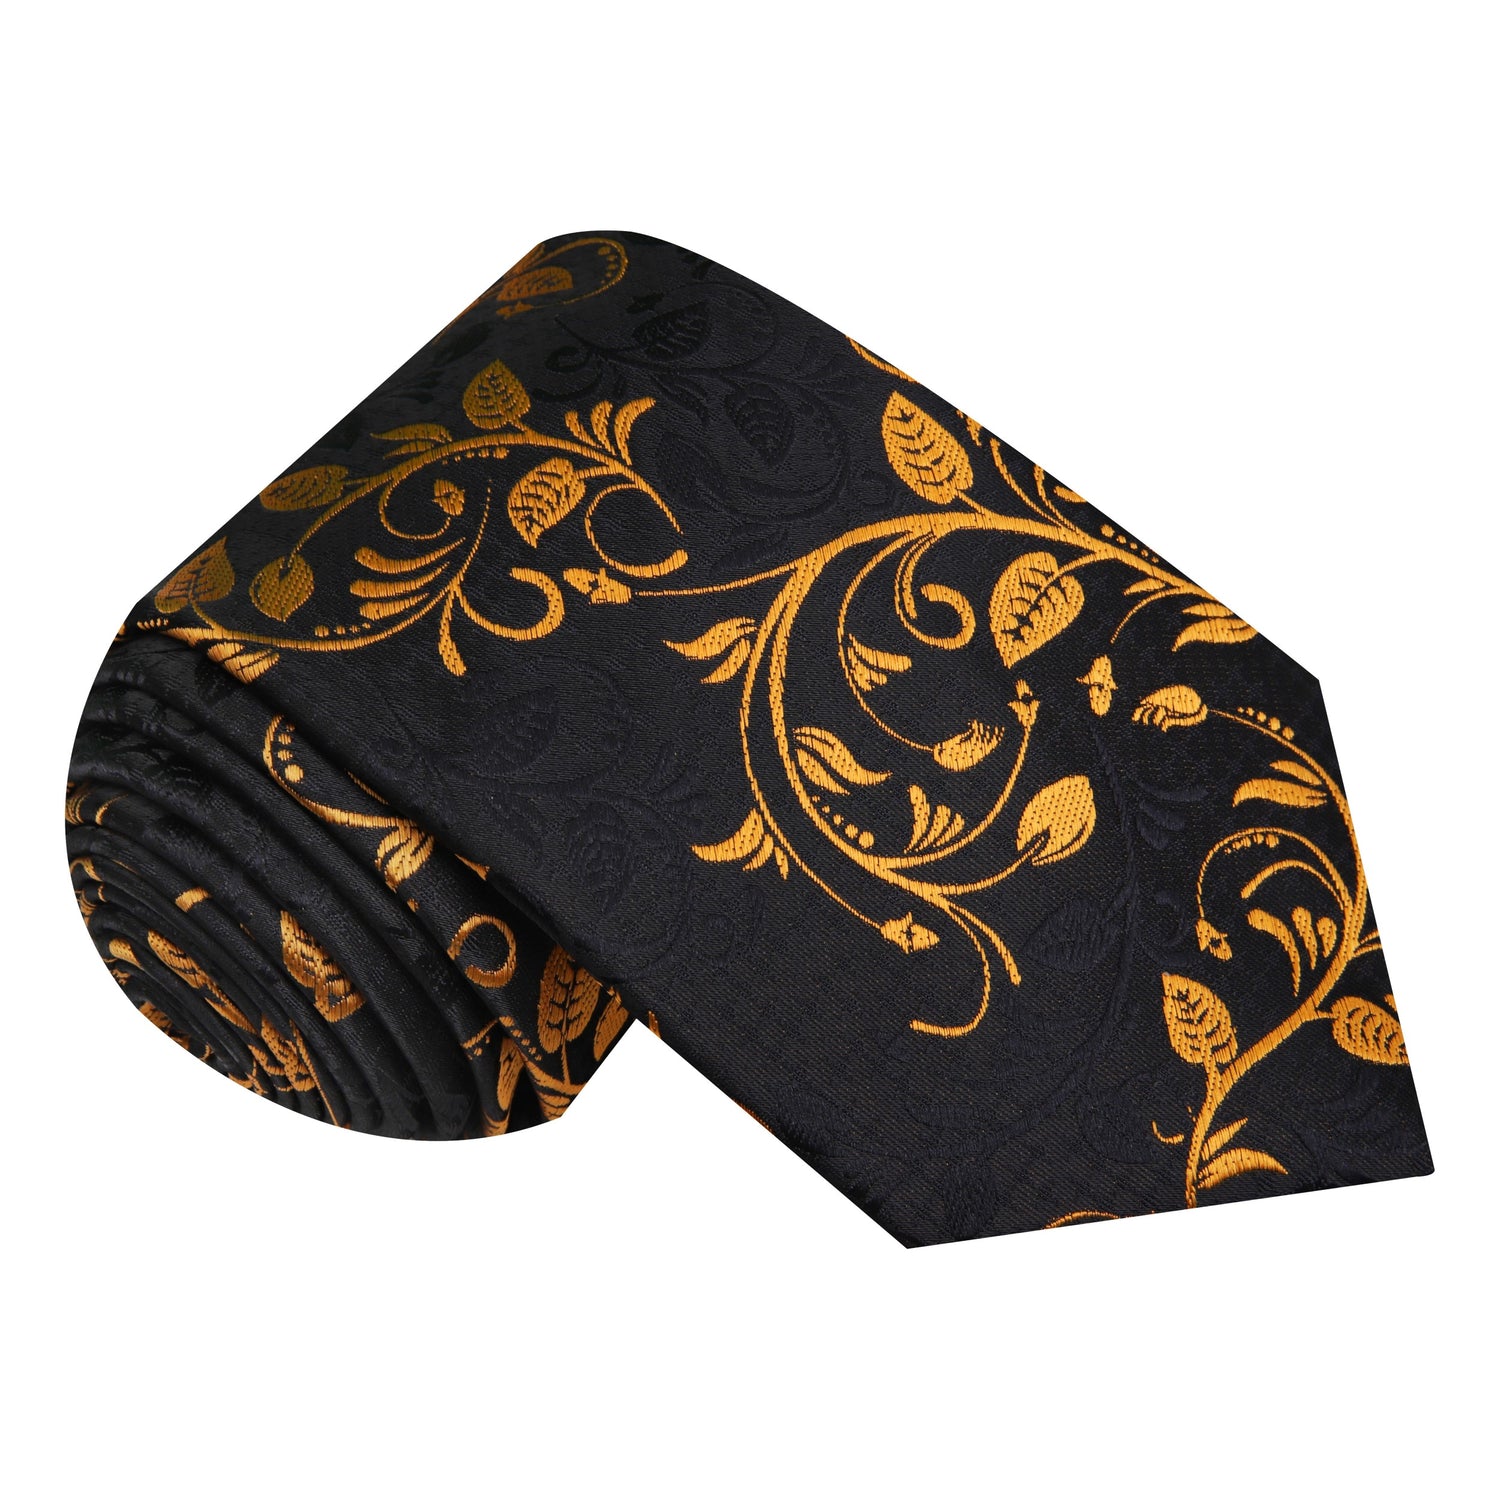 Single Tie: Black and Gold Vines Tie 